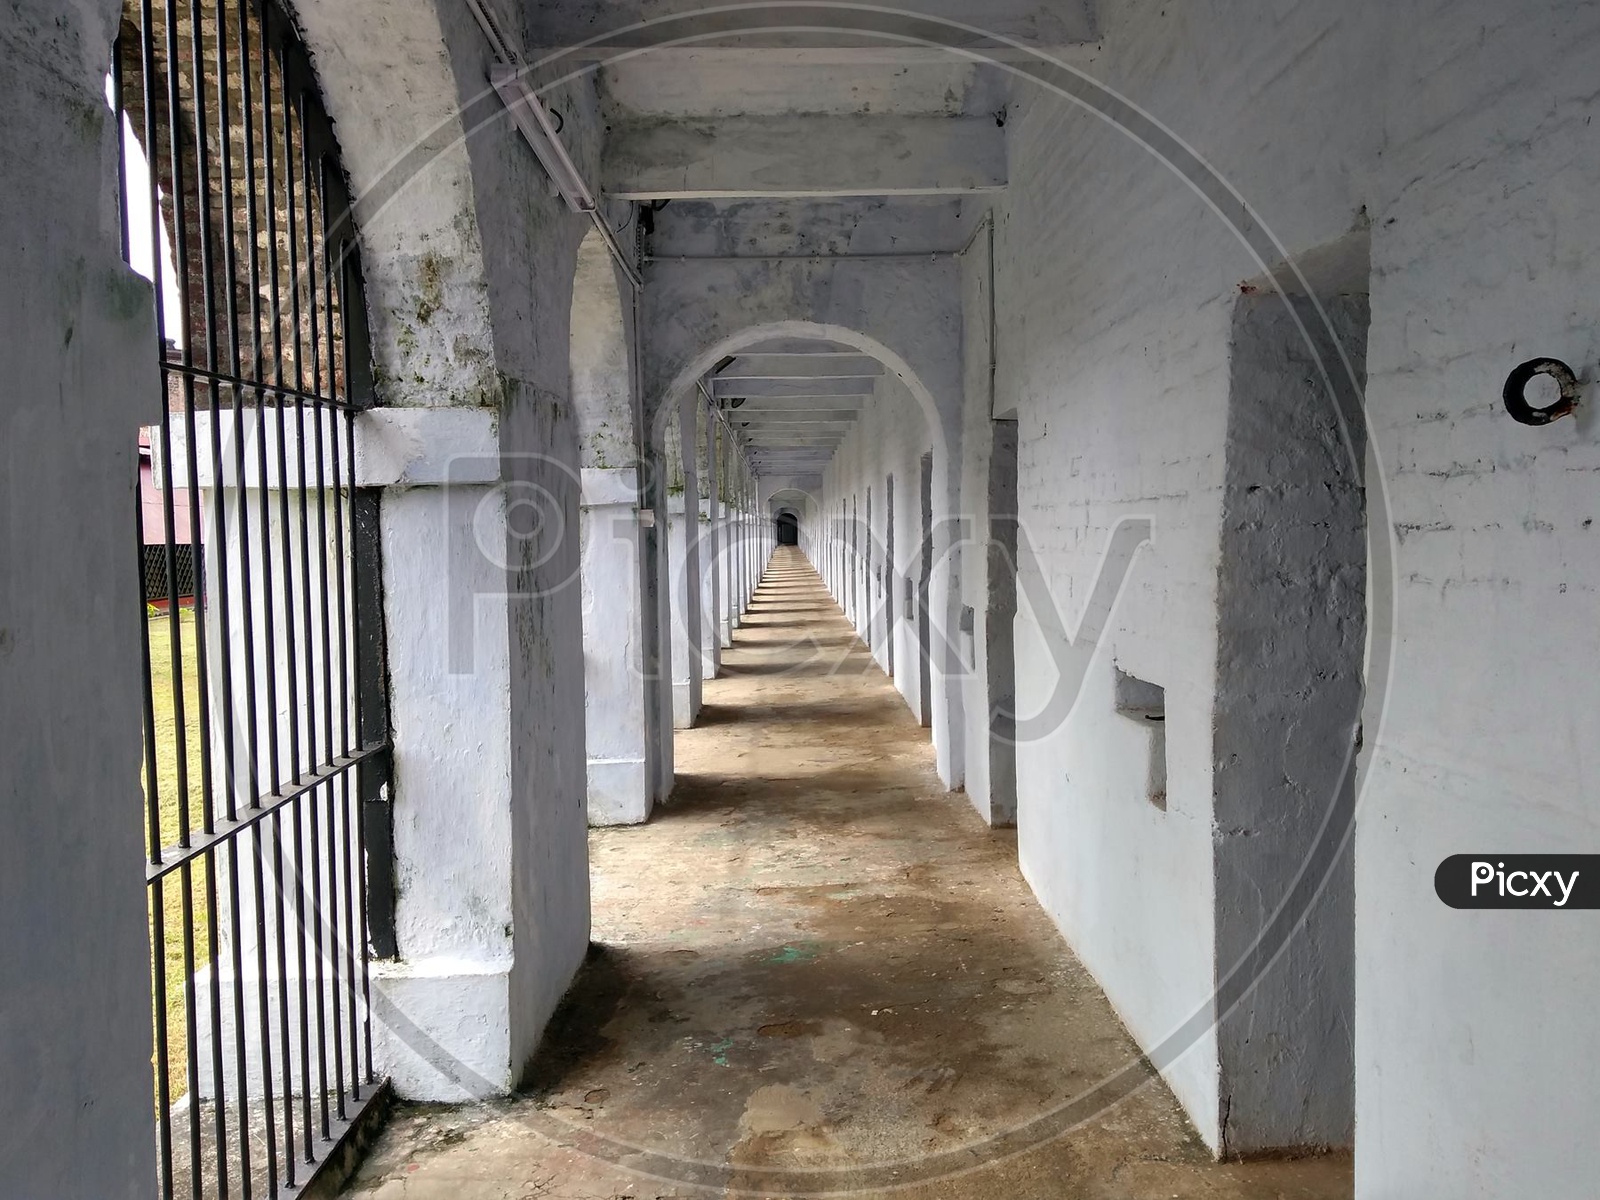 Cellular Jail in Port Blair, Andaman